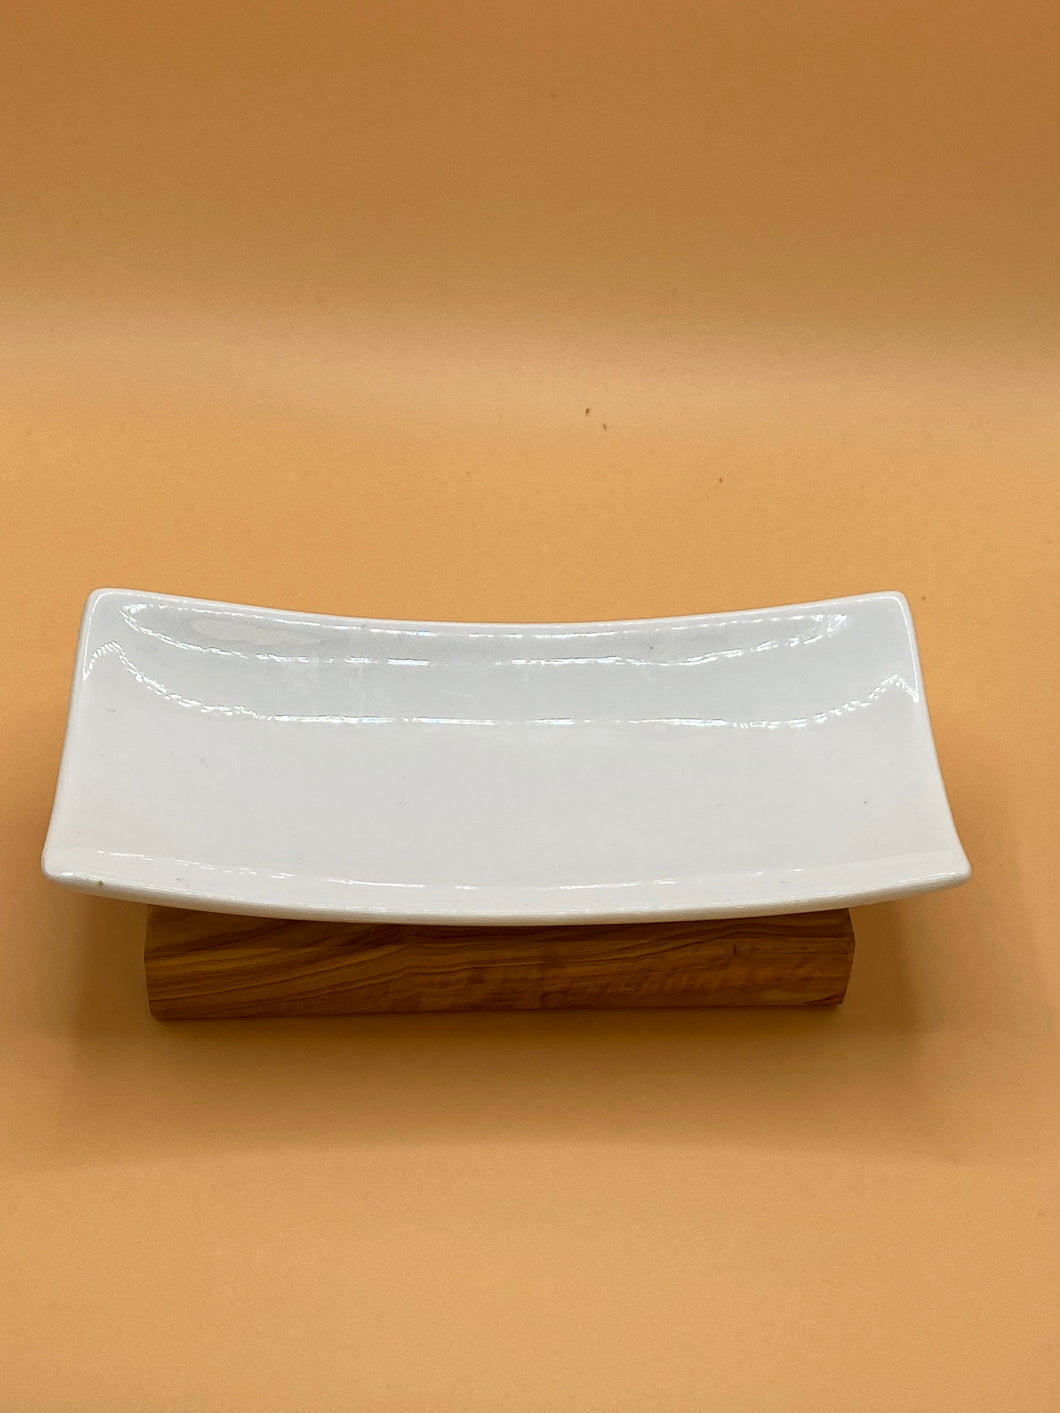 Soap dish (porcelan and olive wood)